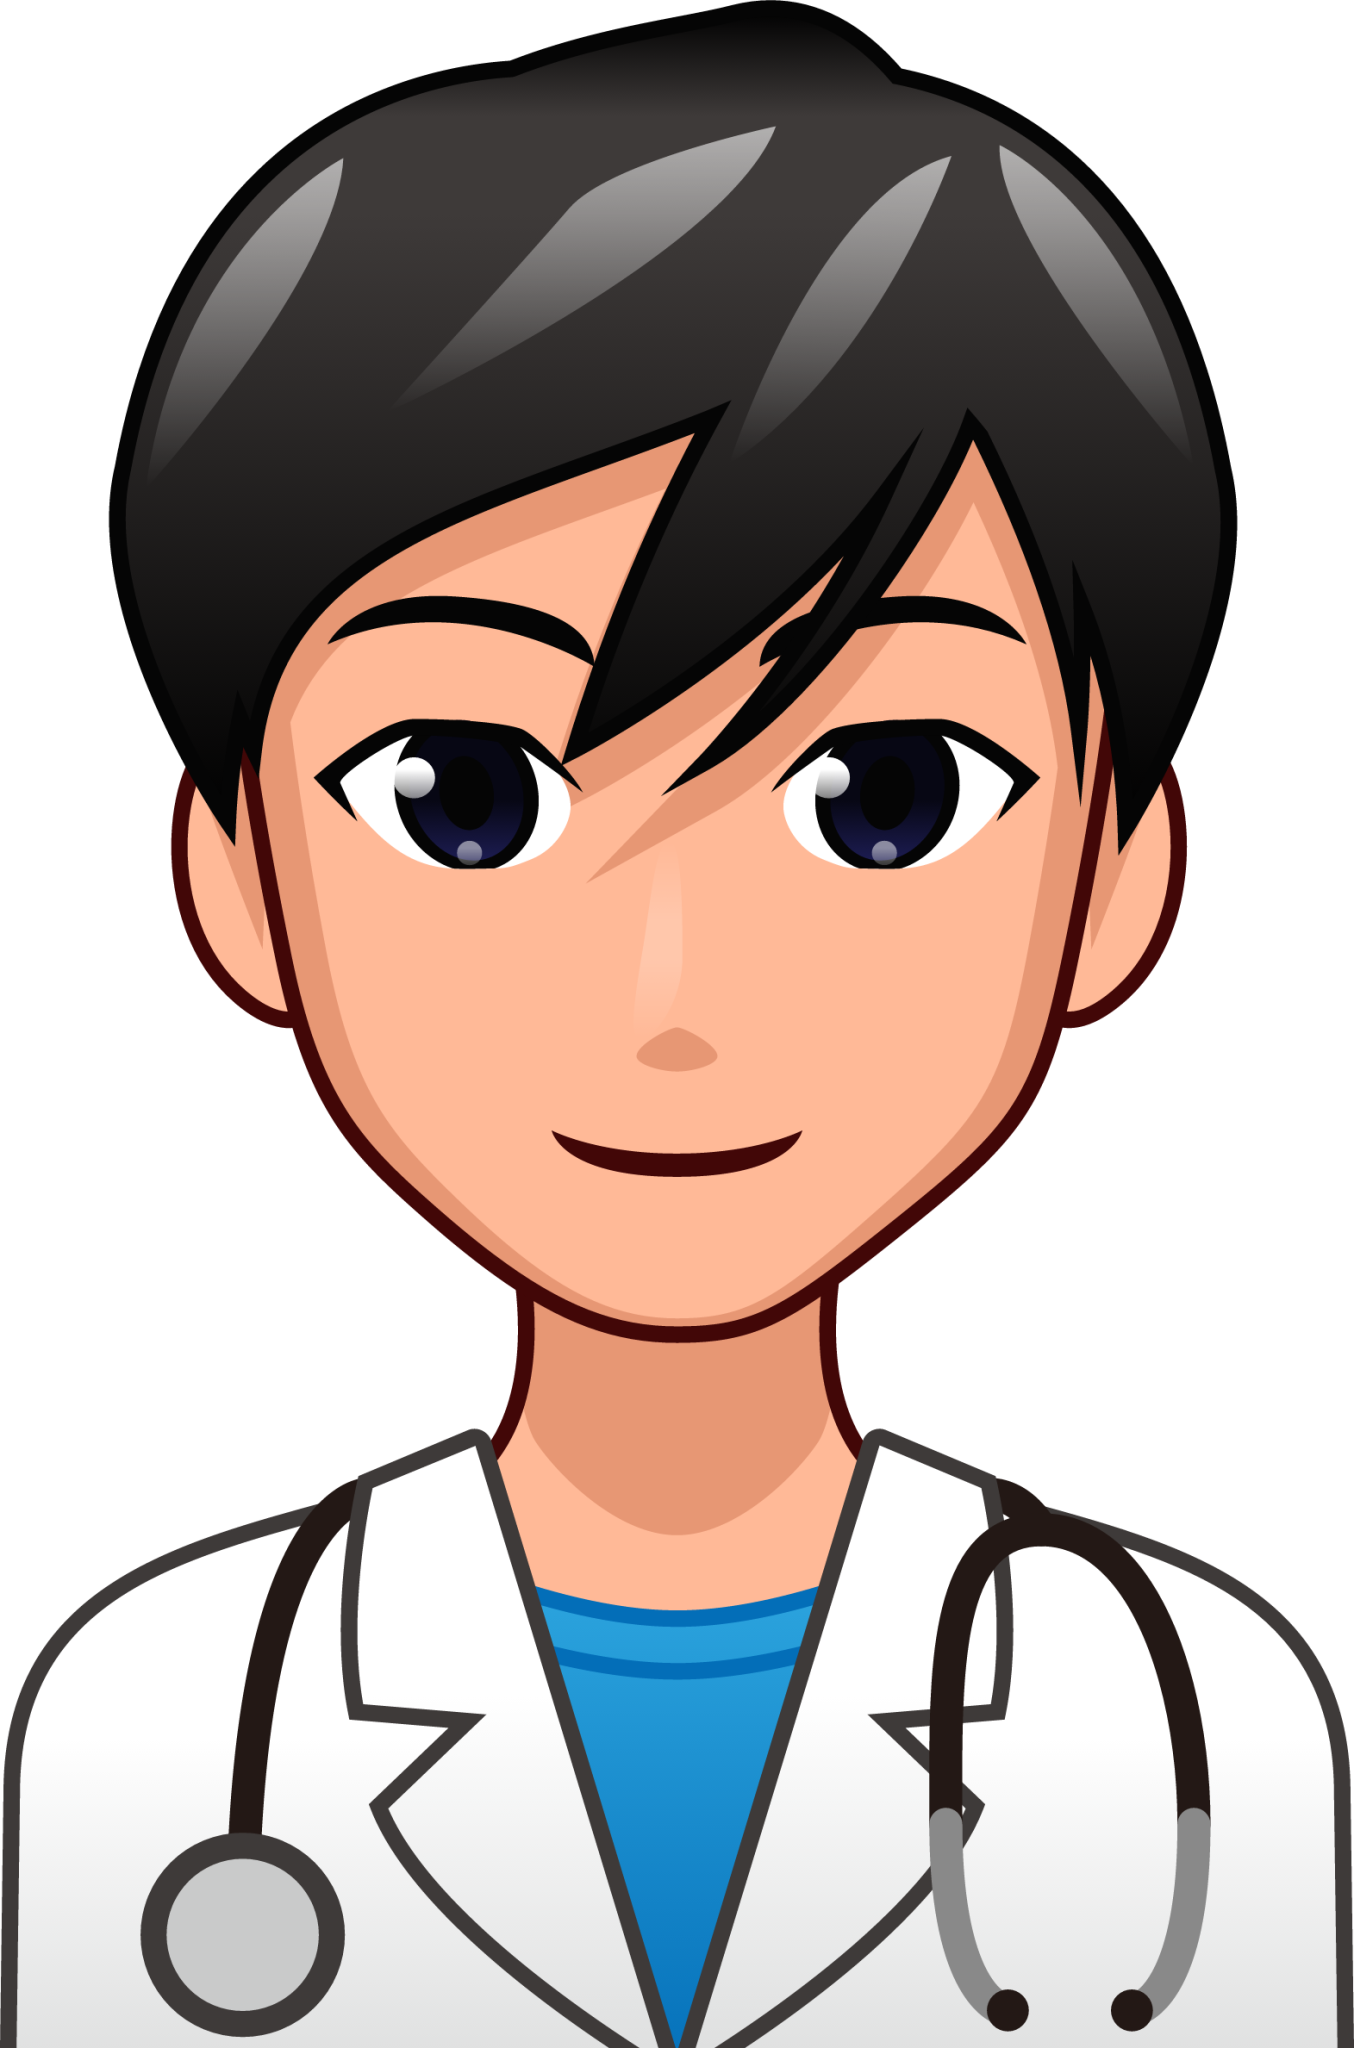 male health worker (plain) emoji